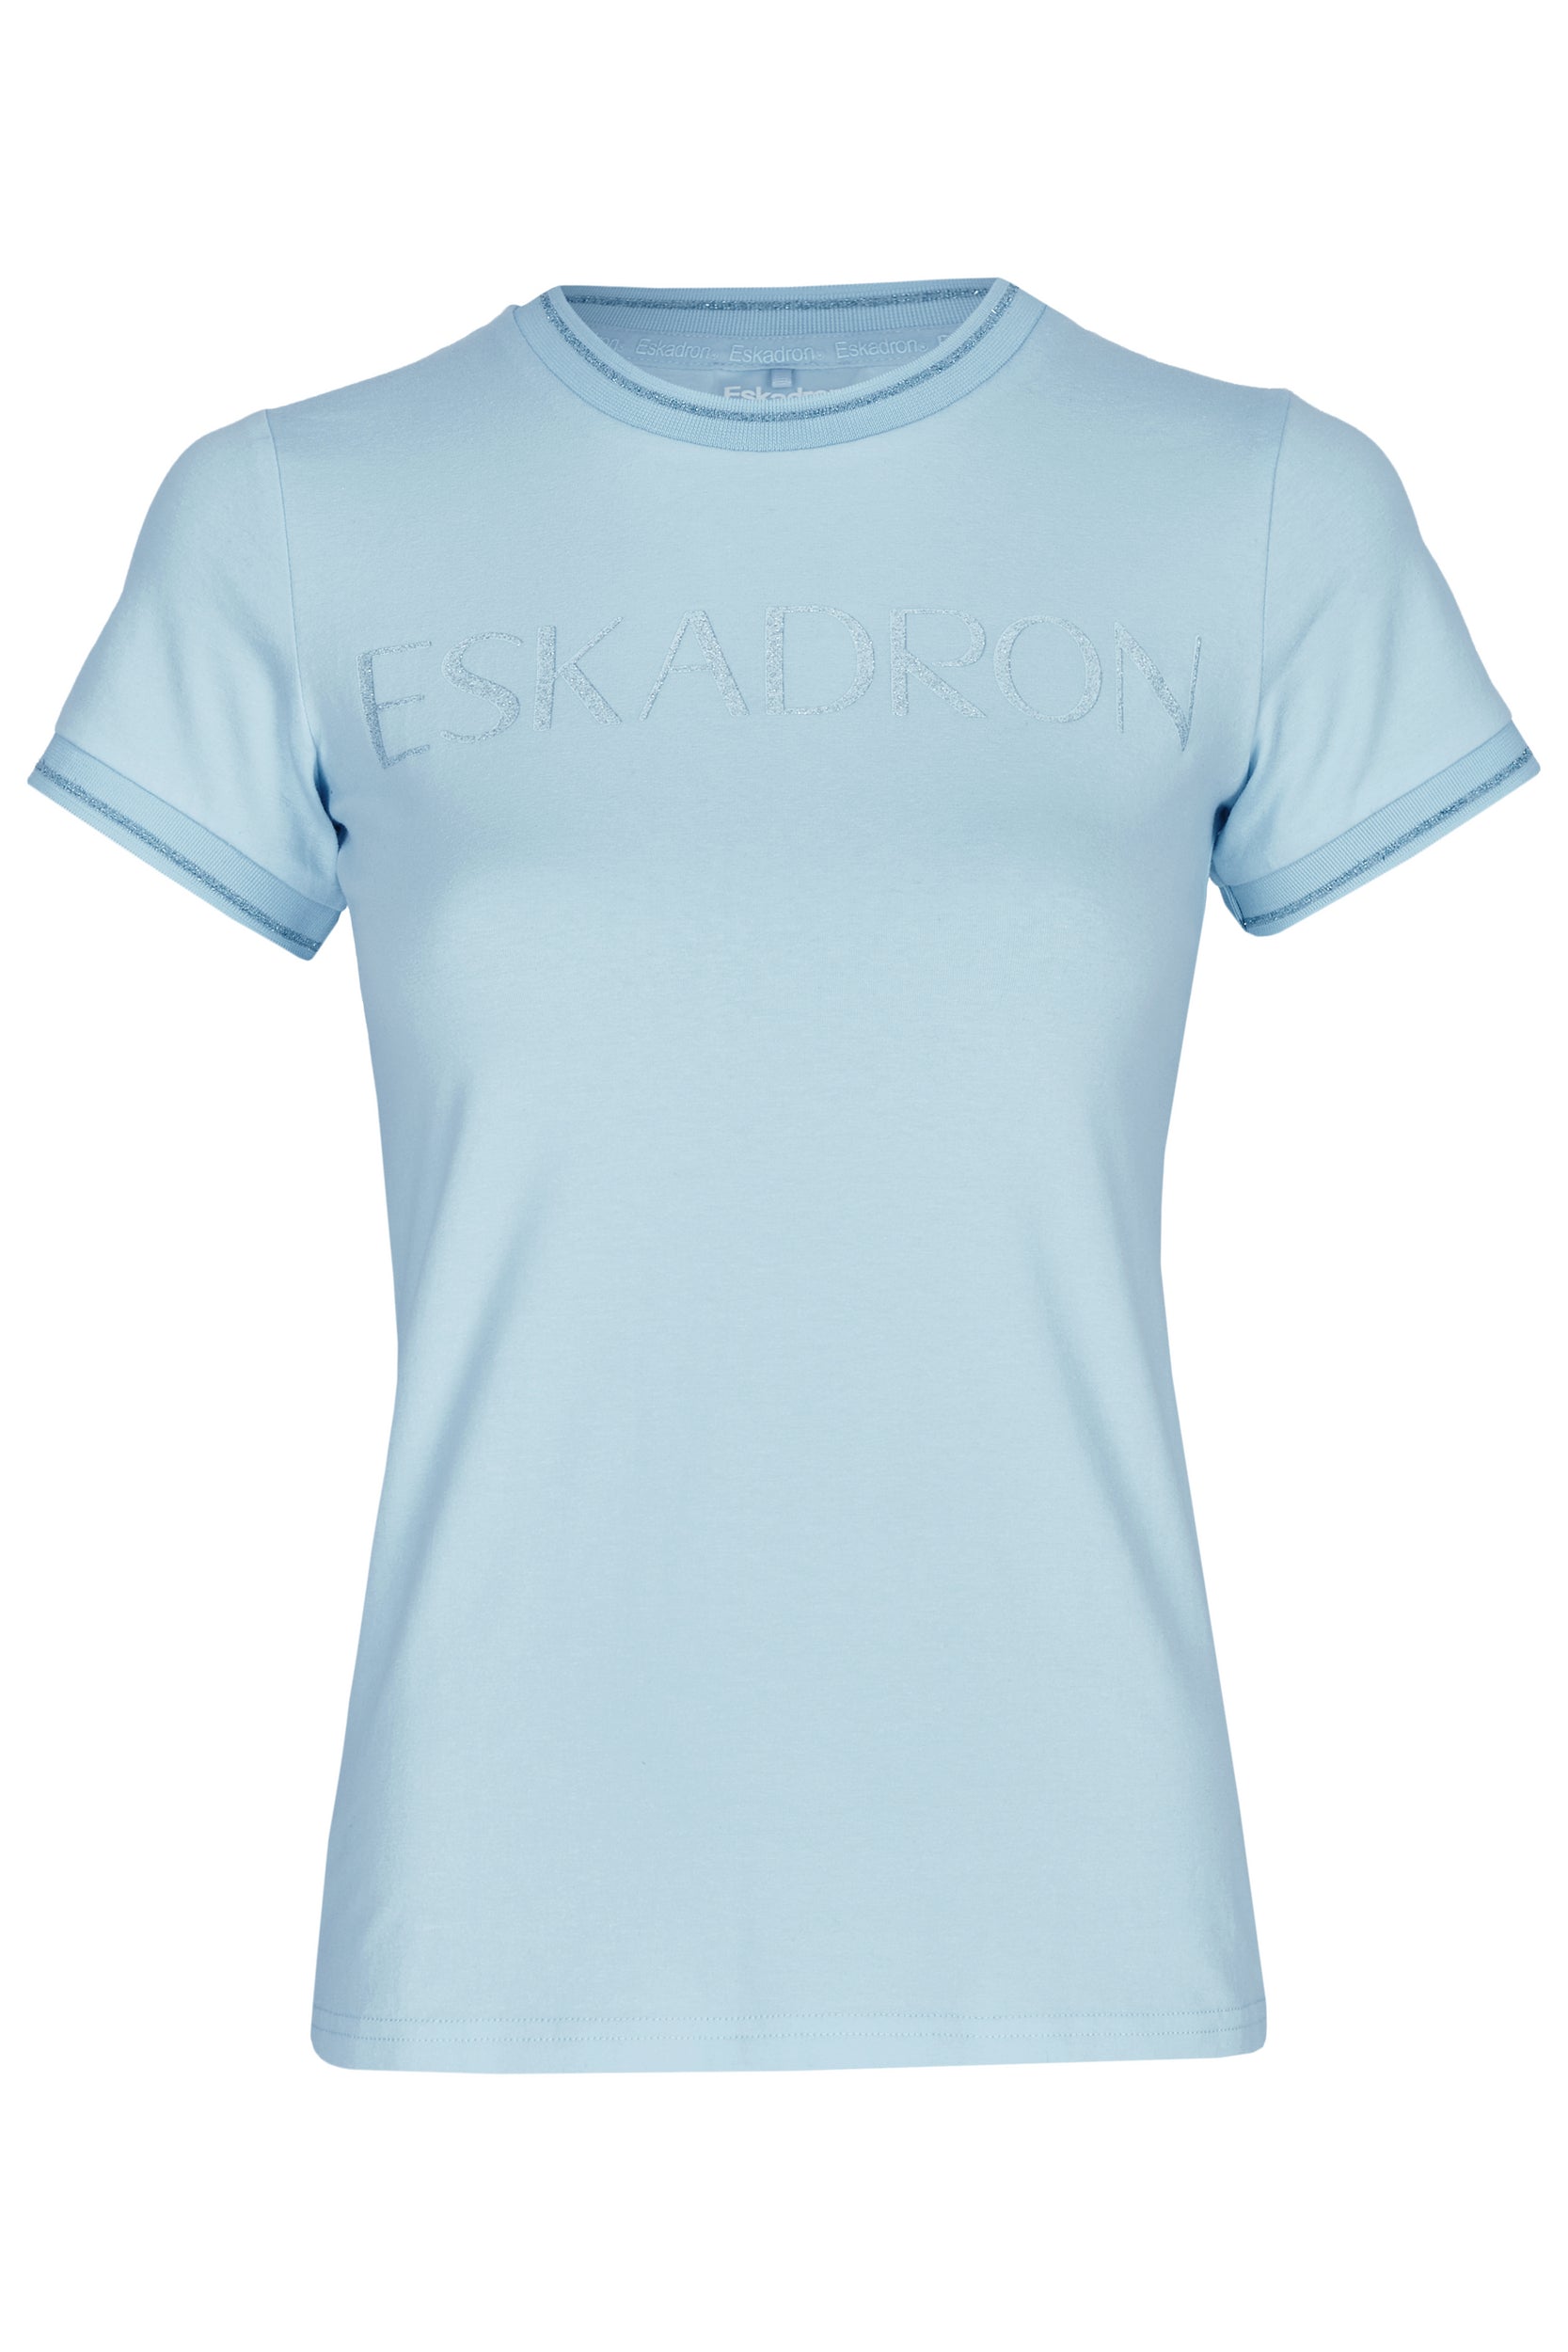 Eskadron Fanatics Silk blue glitter reflex t-shirt- 1 small left